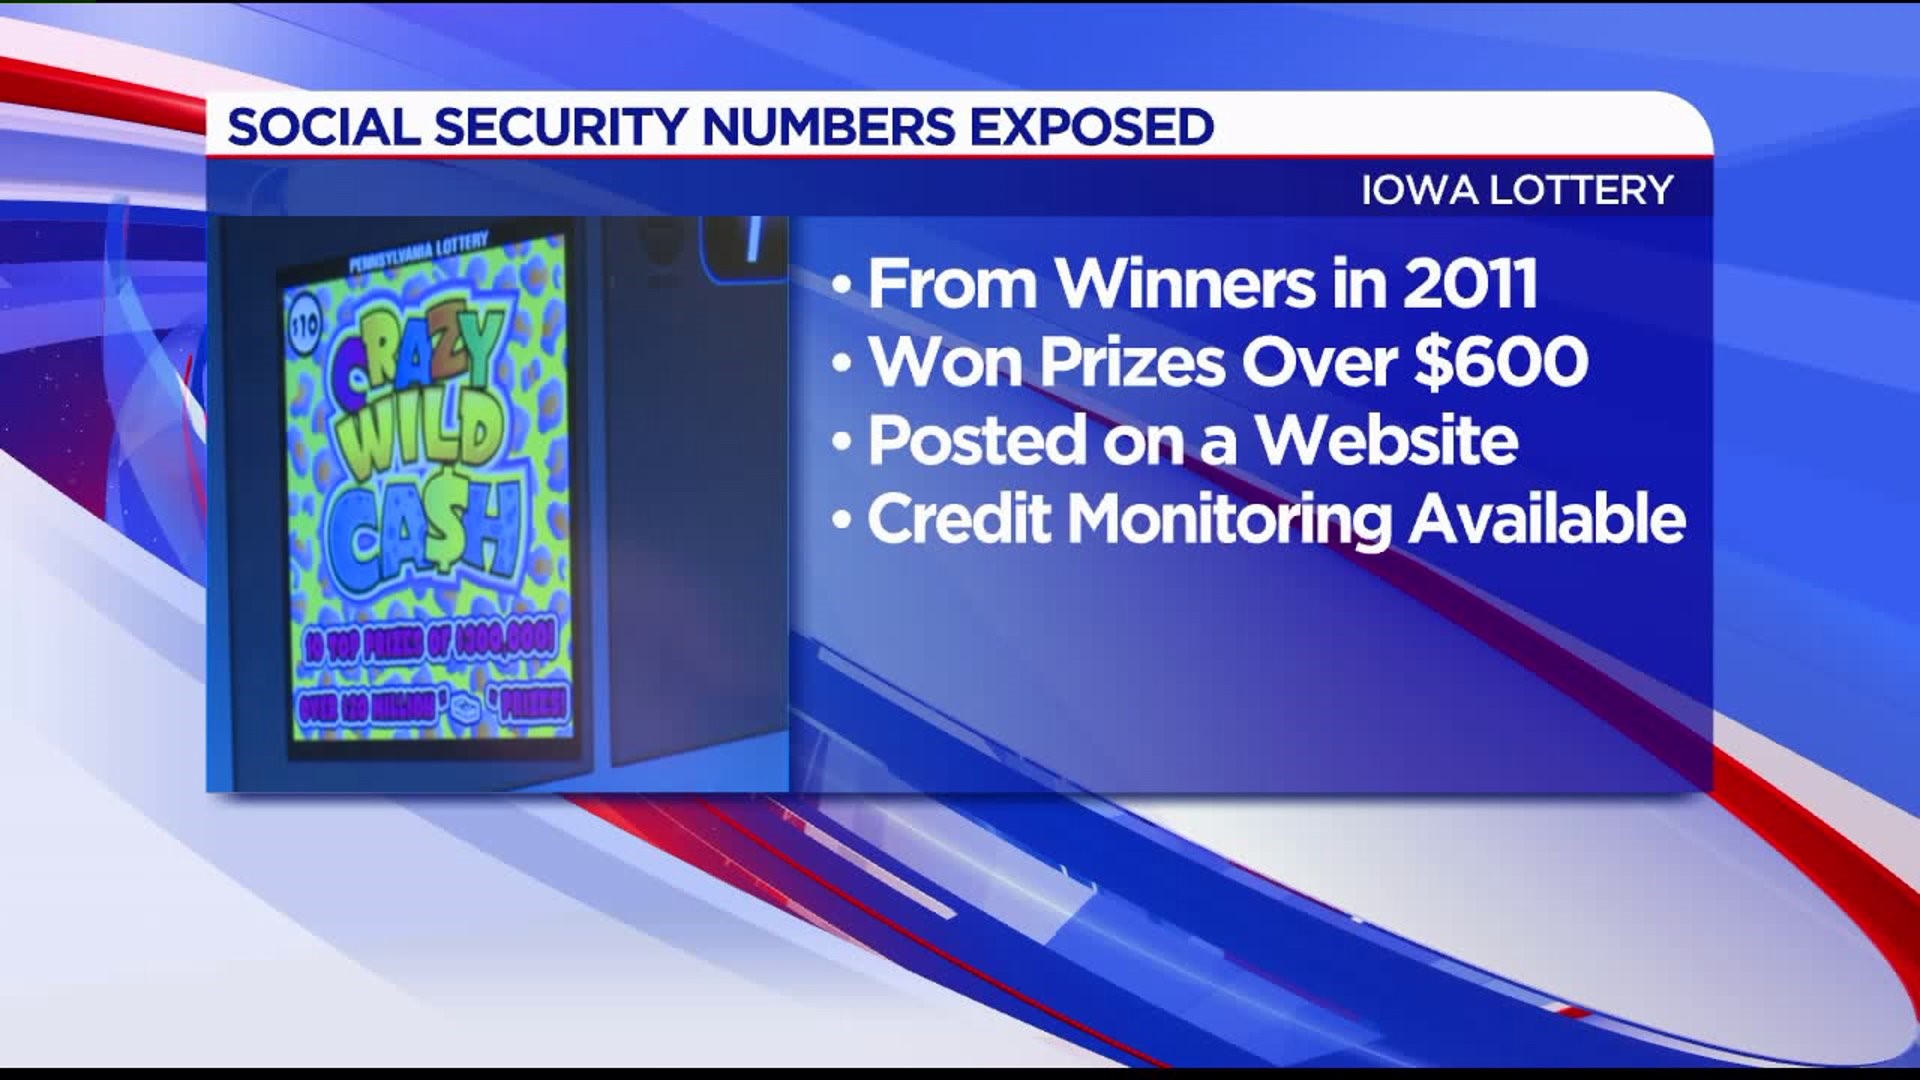 Iowa Lottery security breach